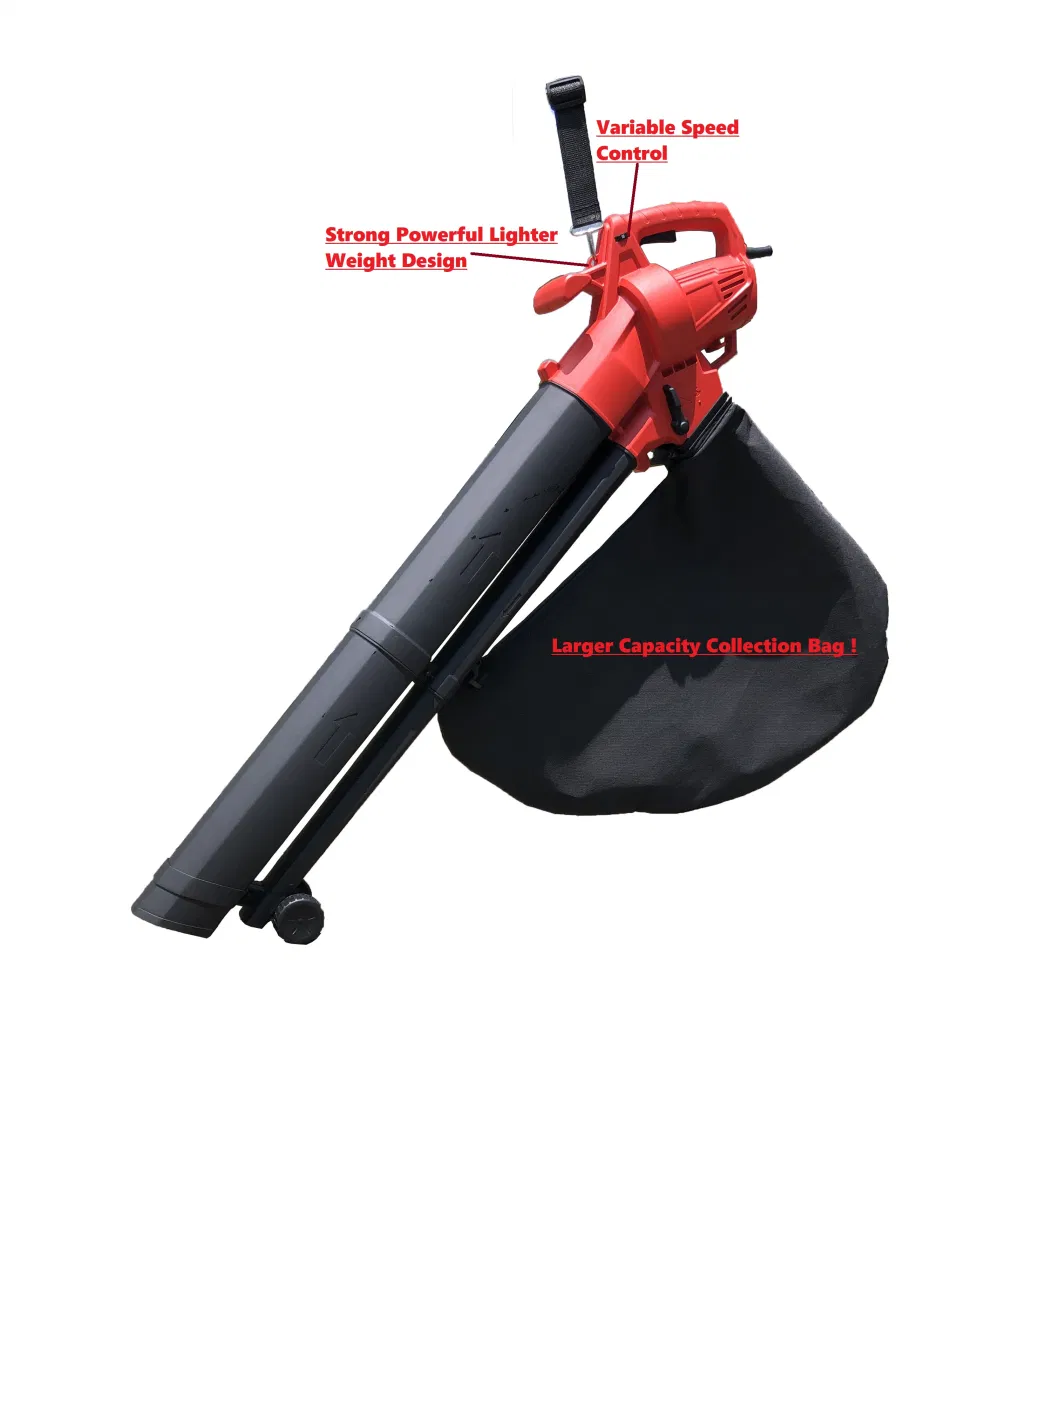 Super Powerful Lighter Electric Garden Leaf Blower/Vacuum/Shredder Power Tool